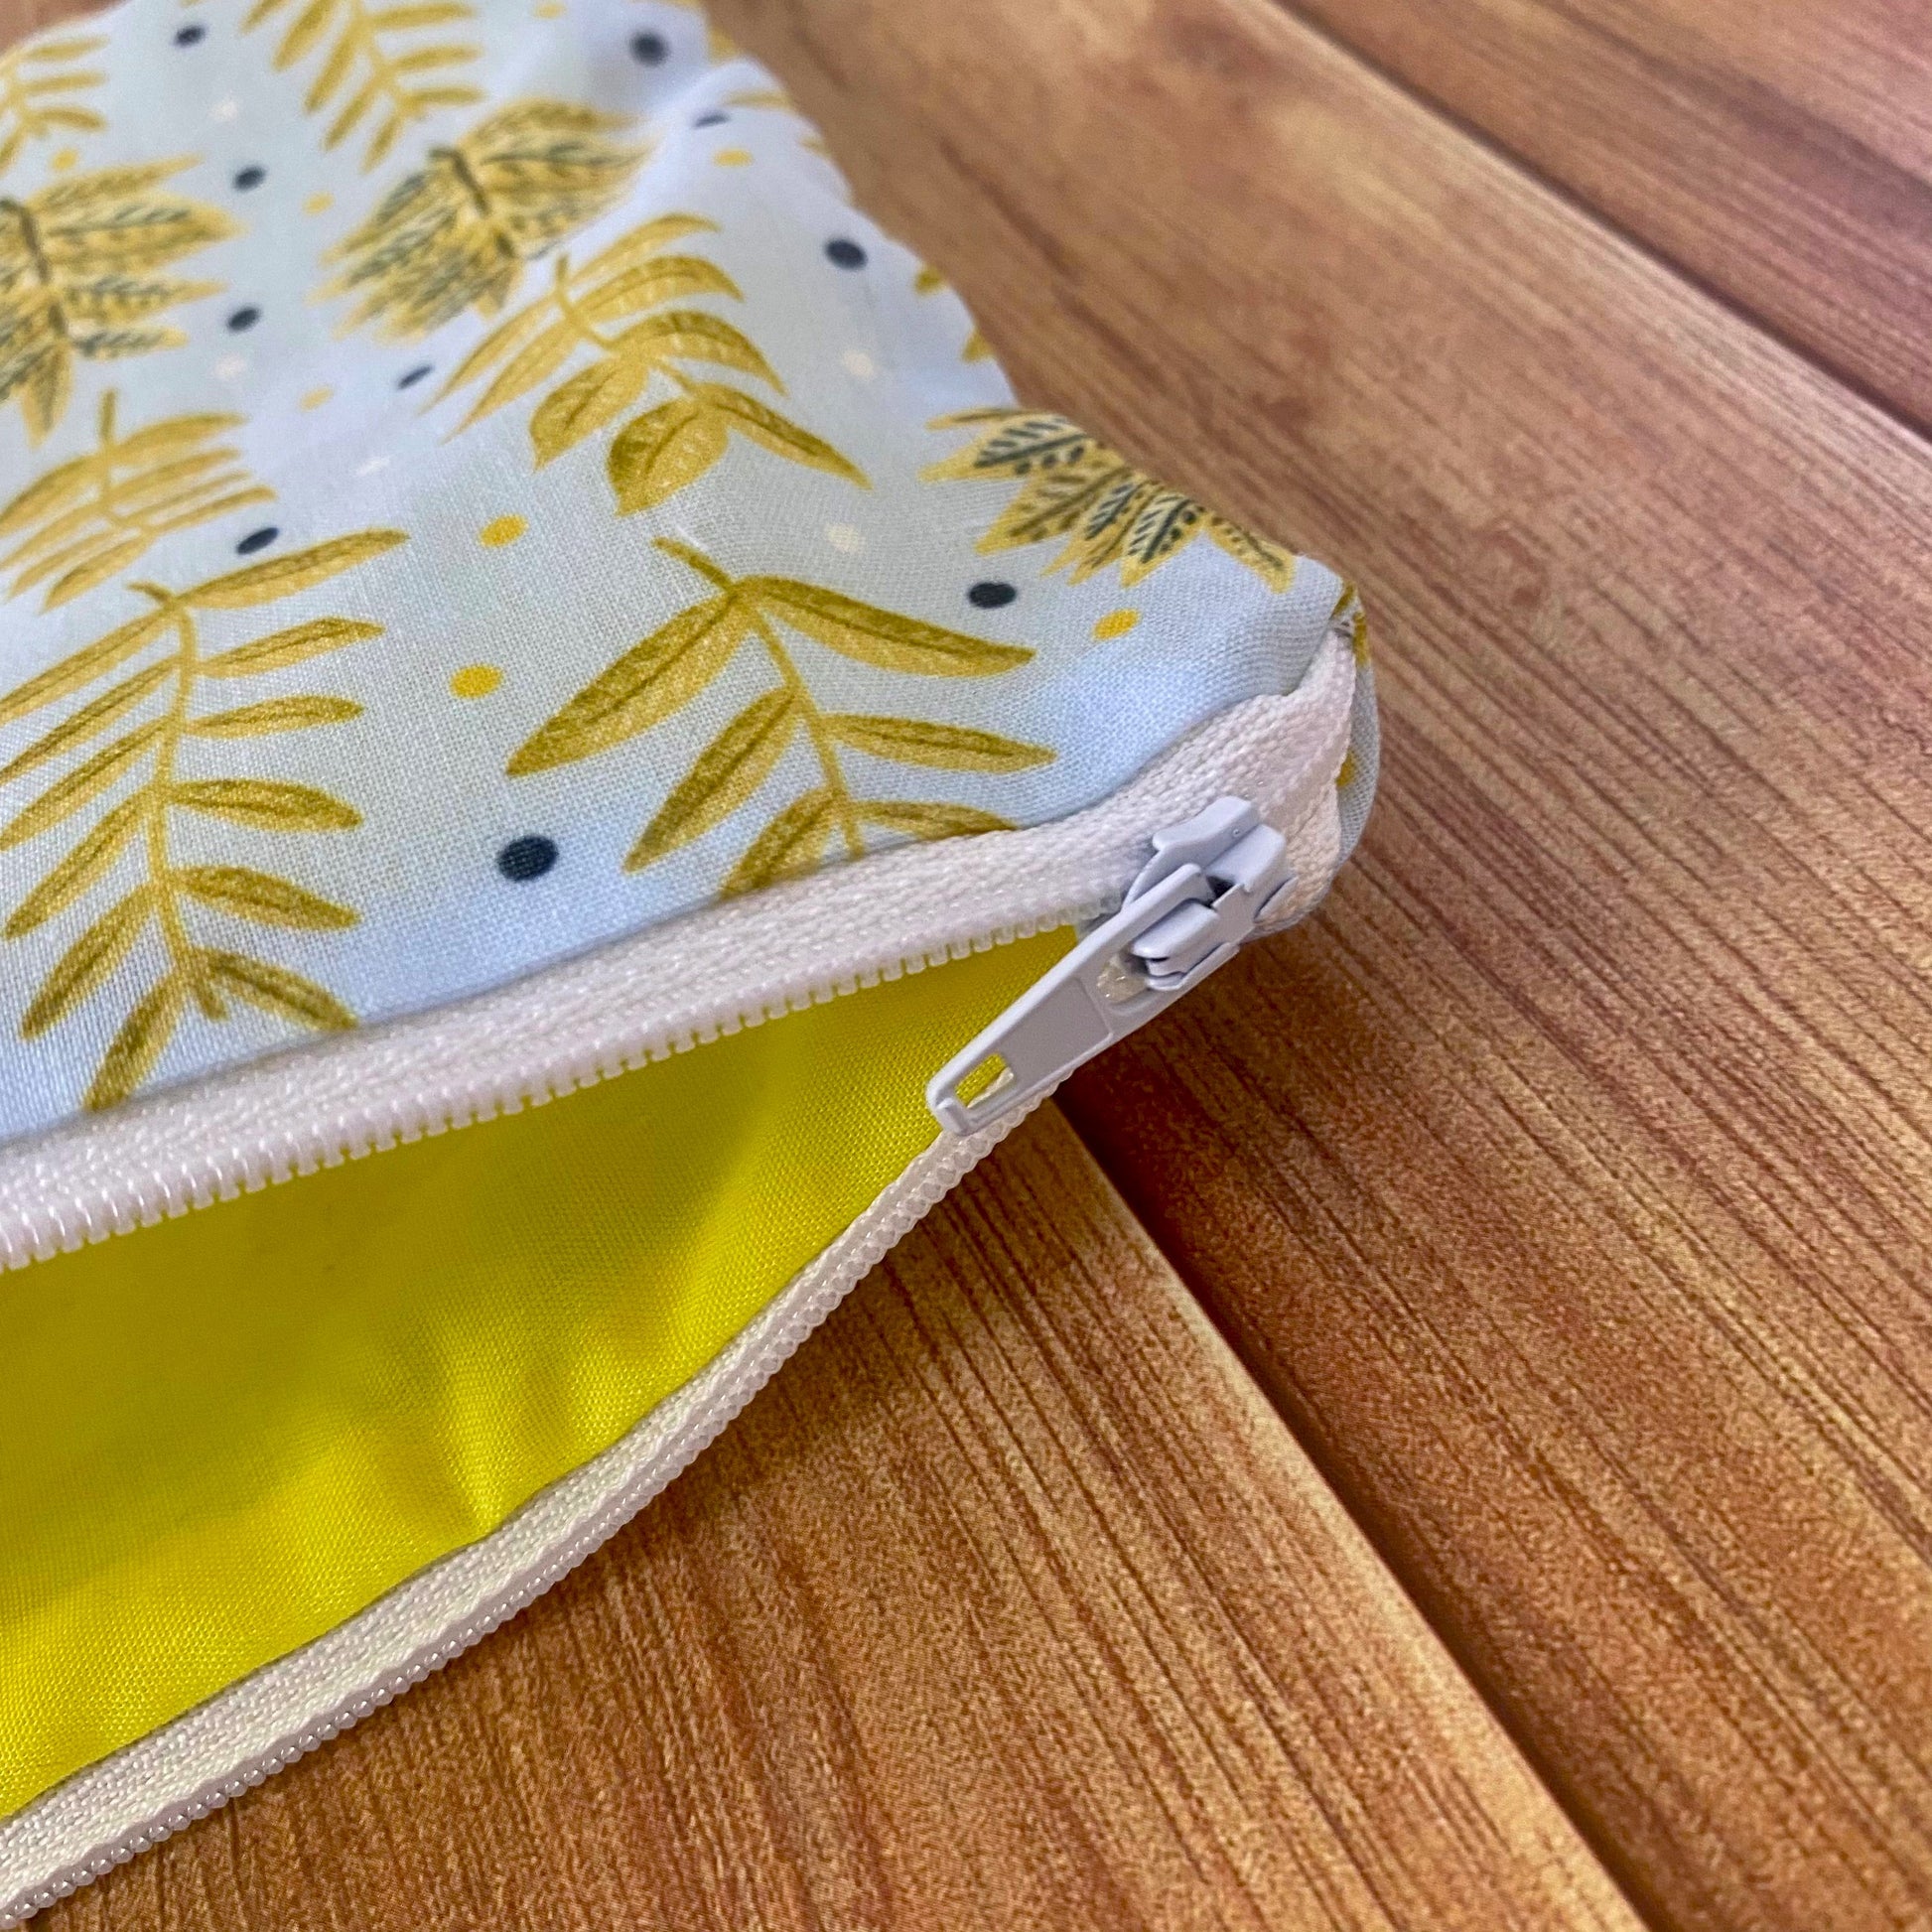 yellow foliage patterned pouch closeup showing yellow lining inside